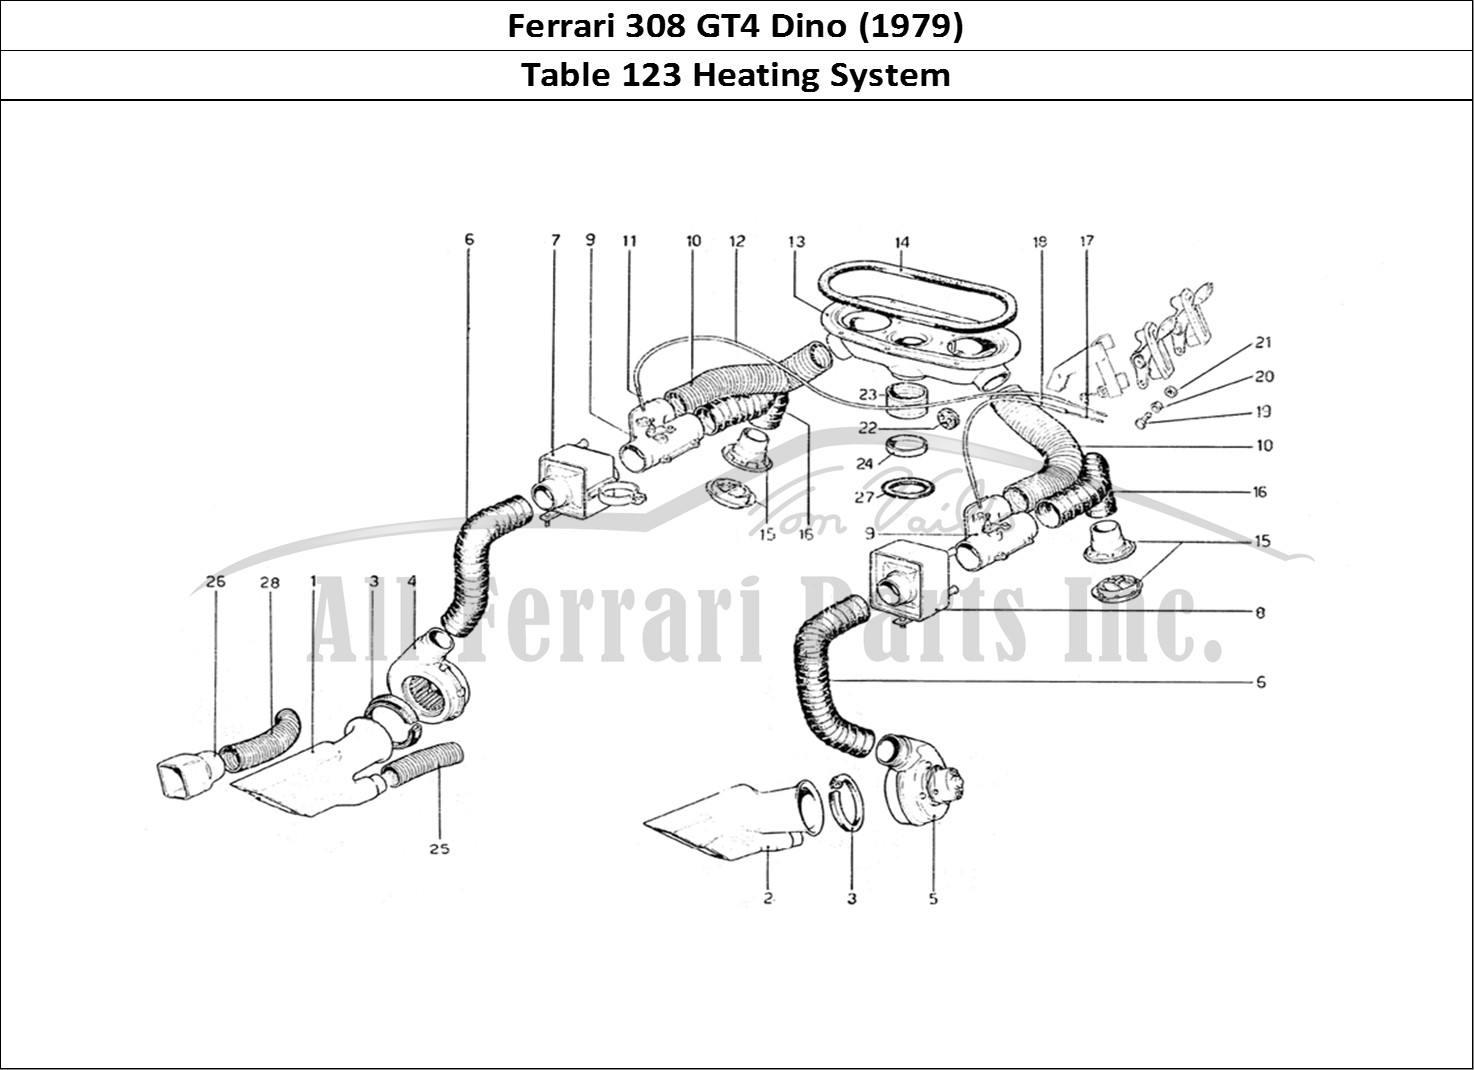 Ferrari Parts Ferrari 308 GT4 Dino (1979) Page 123 Heating System